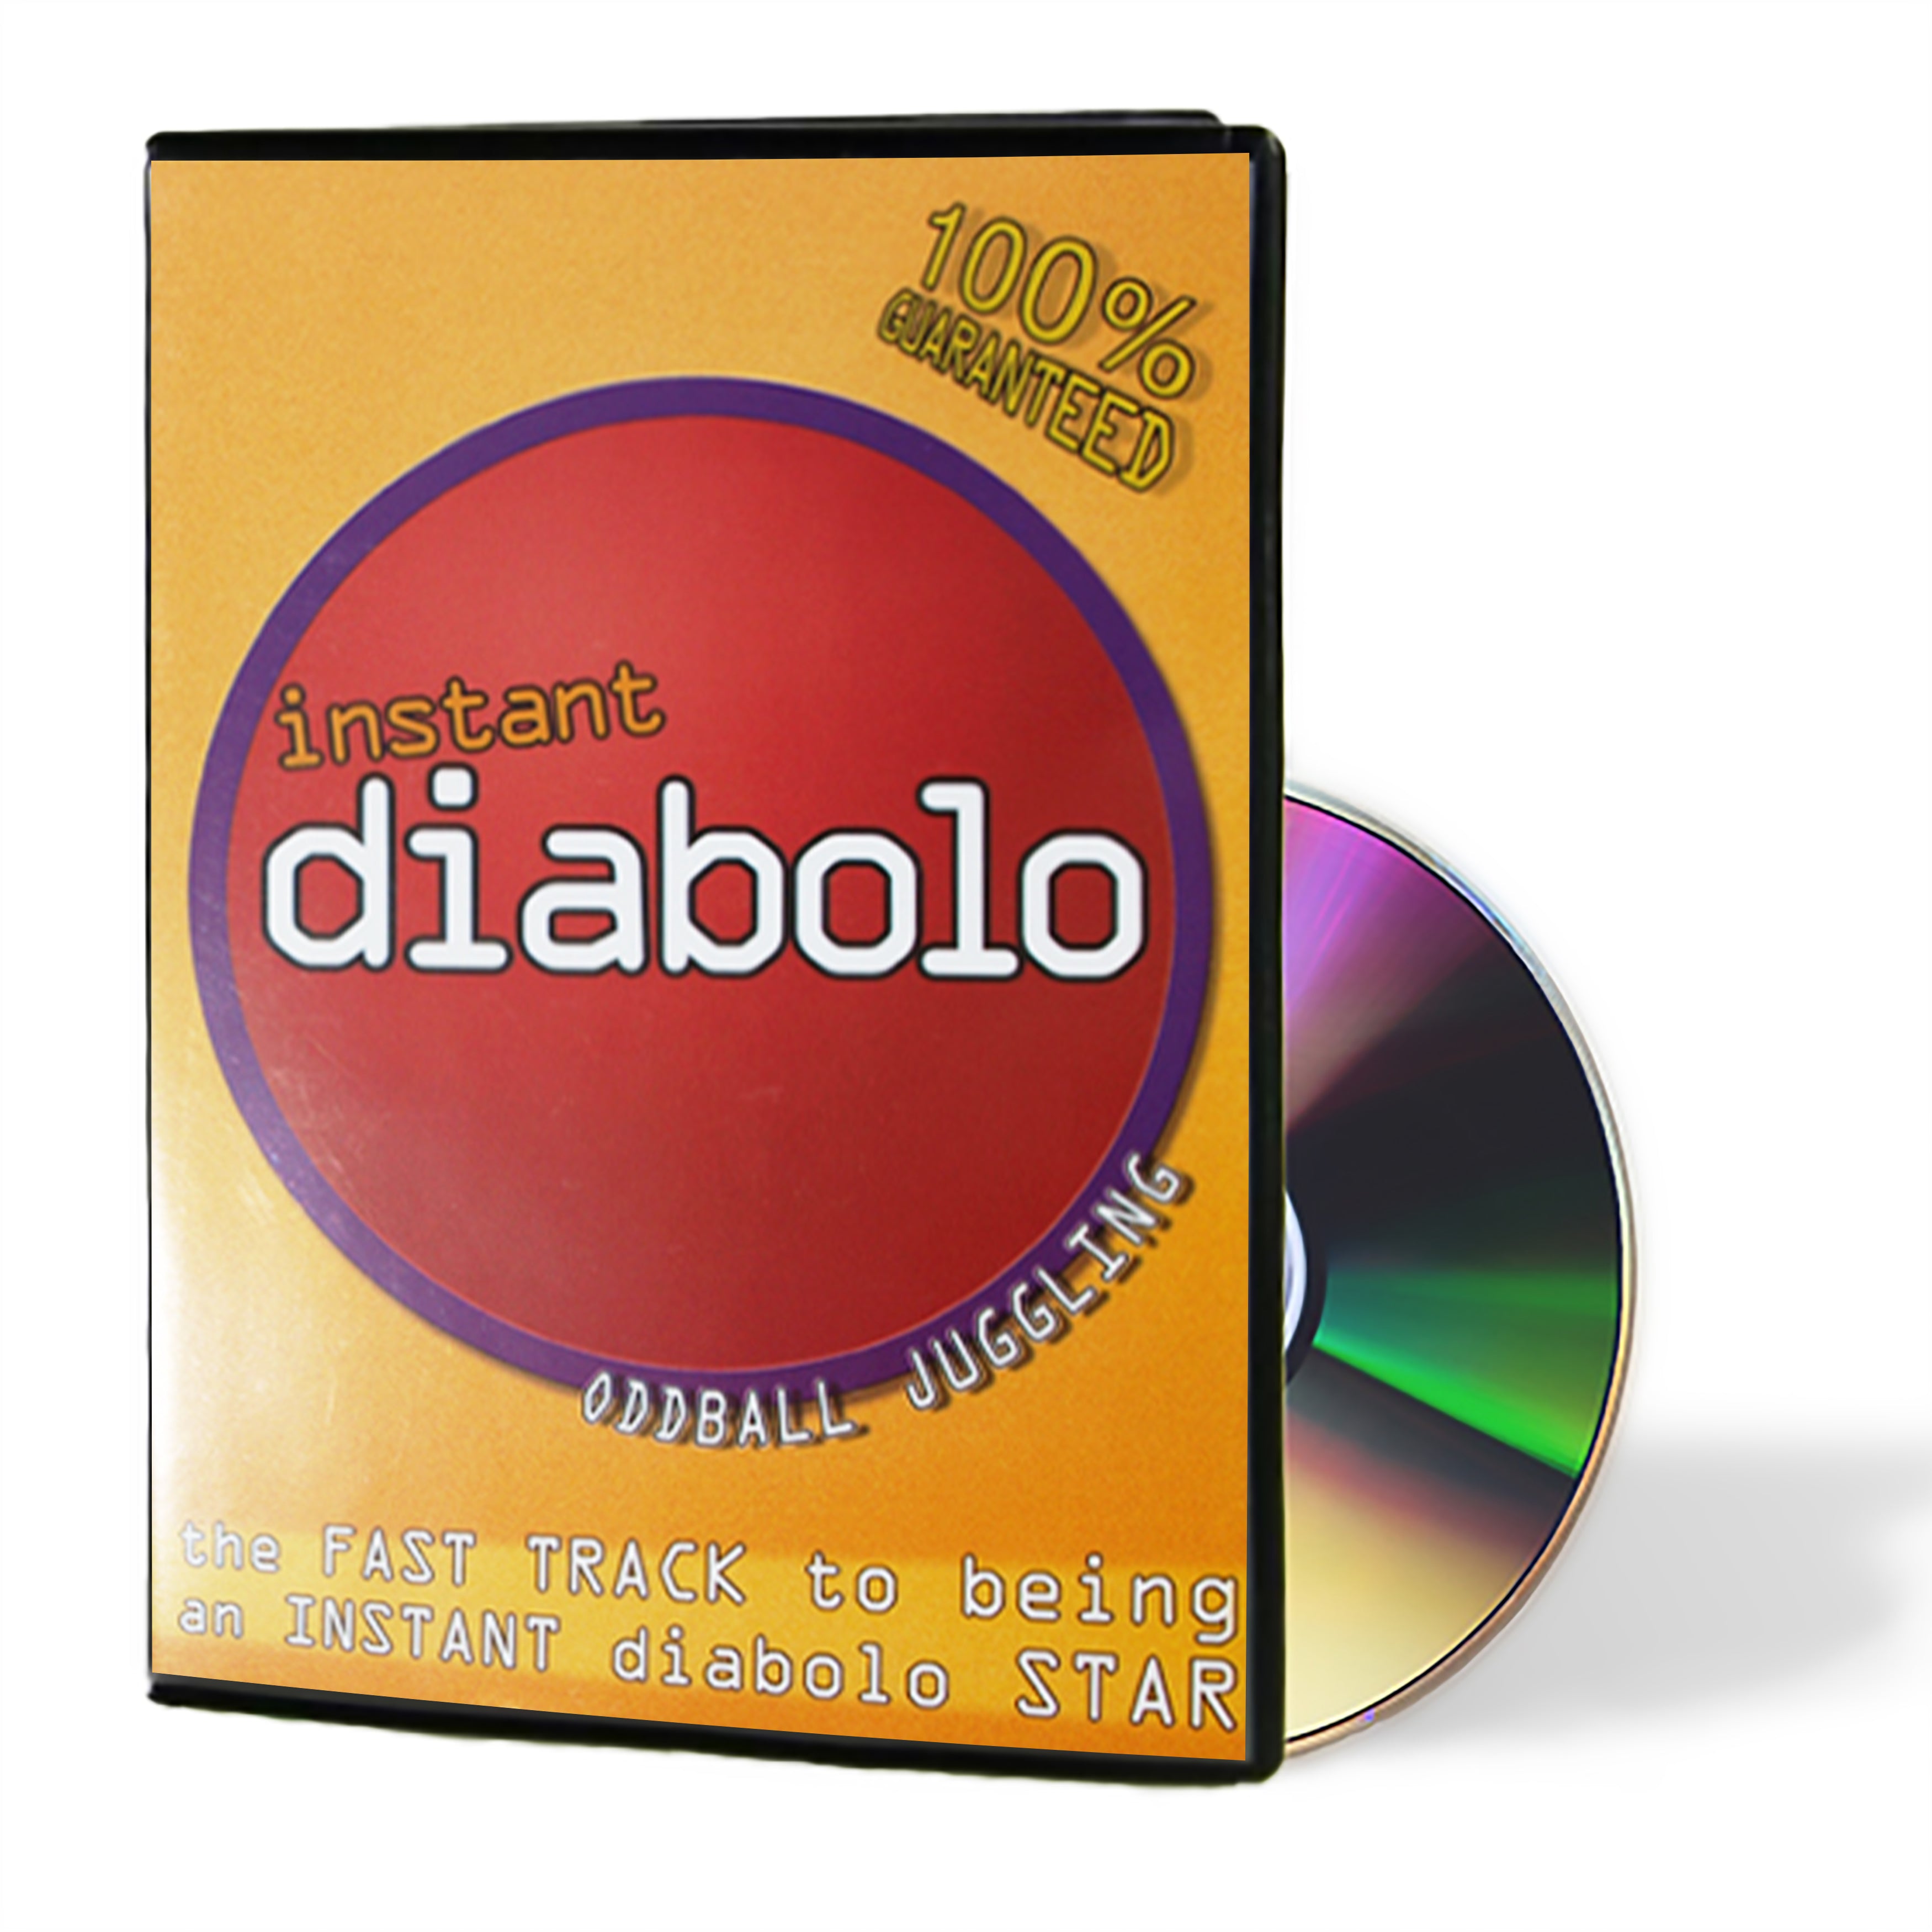 Oddballs Instant Diabolo DVD